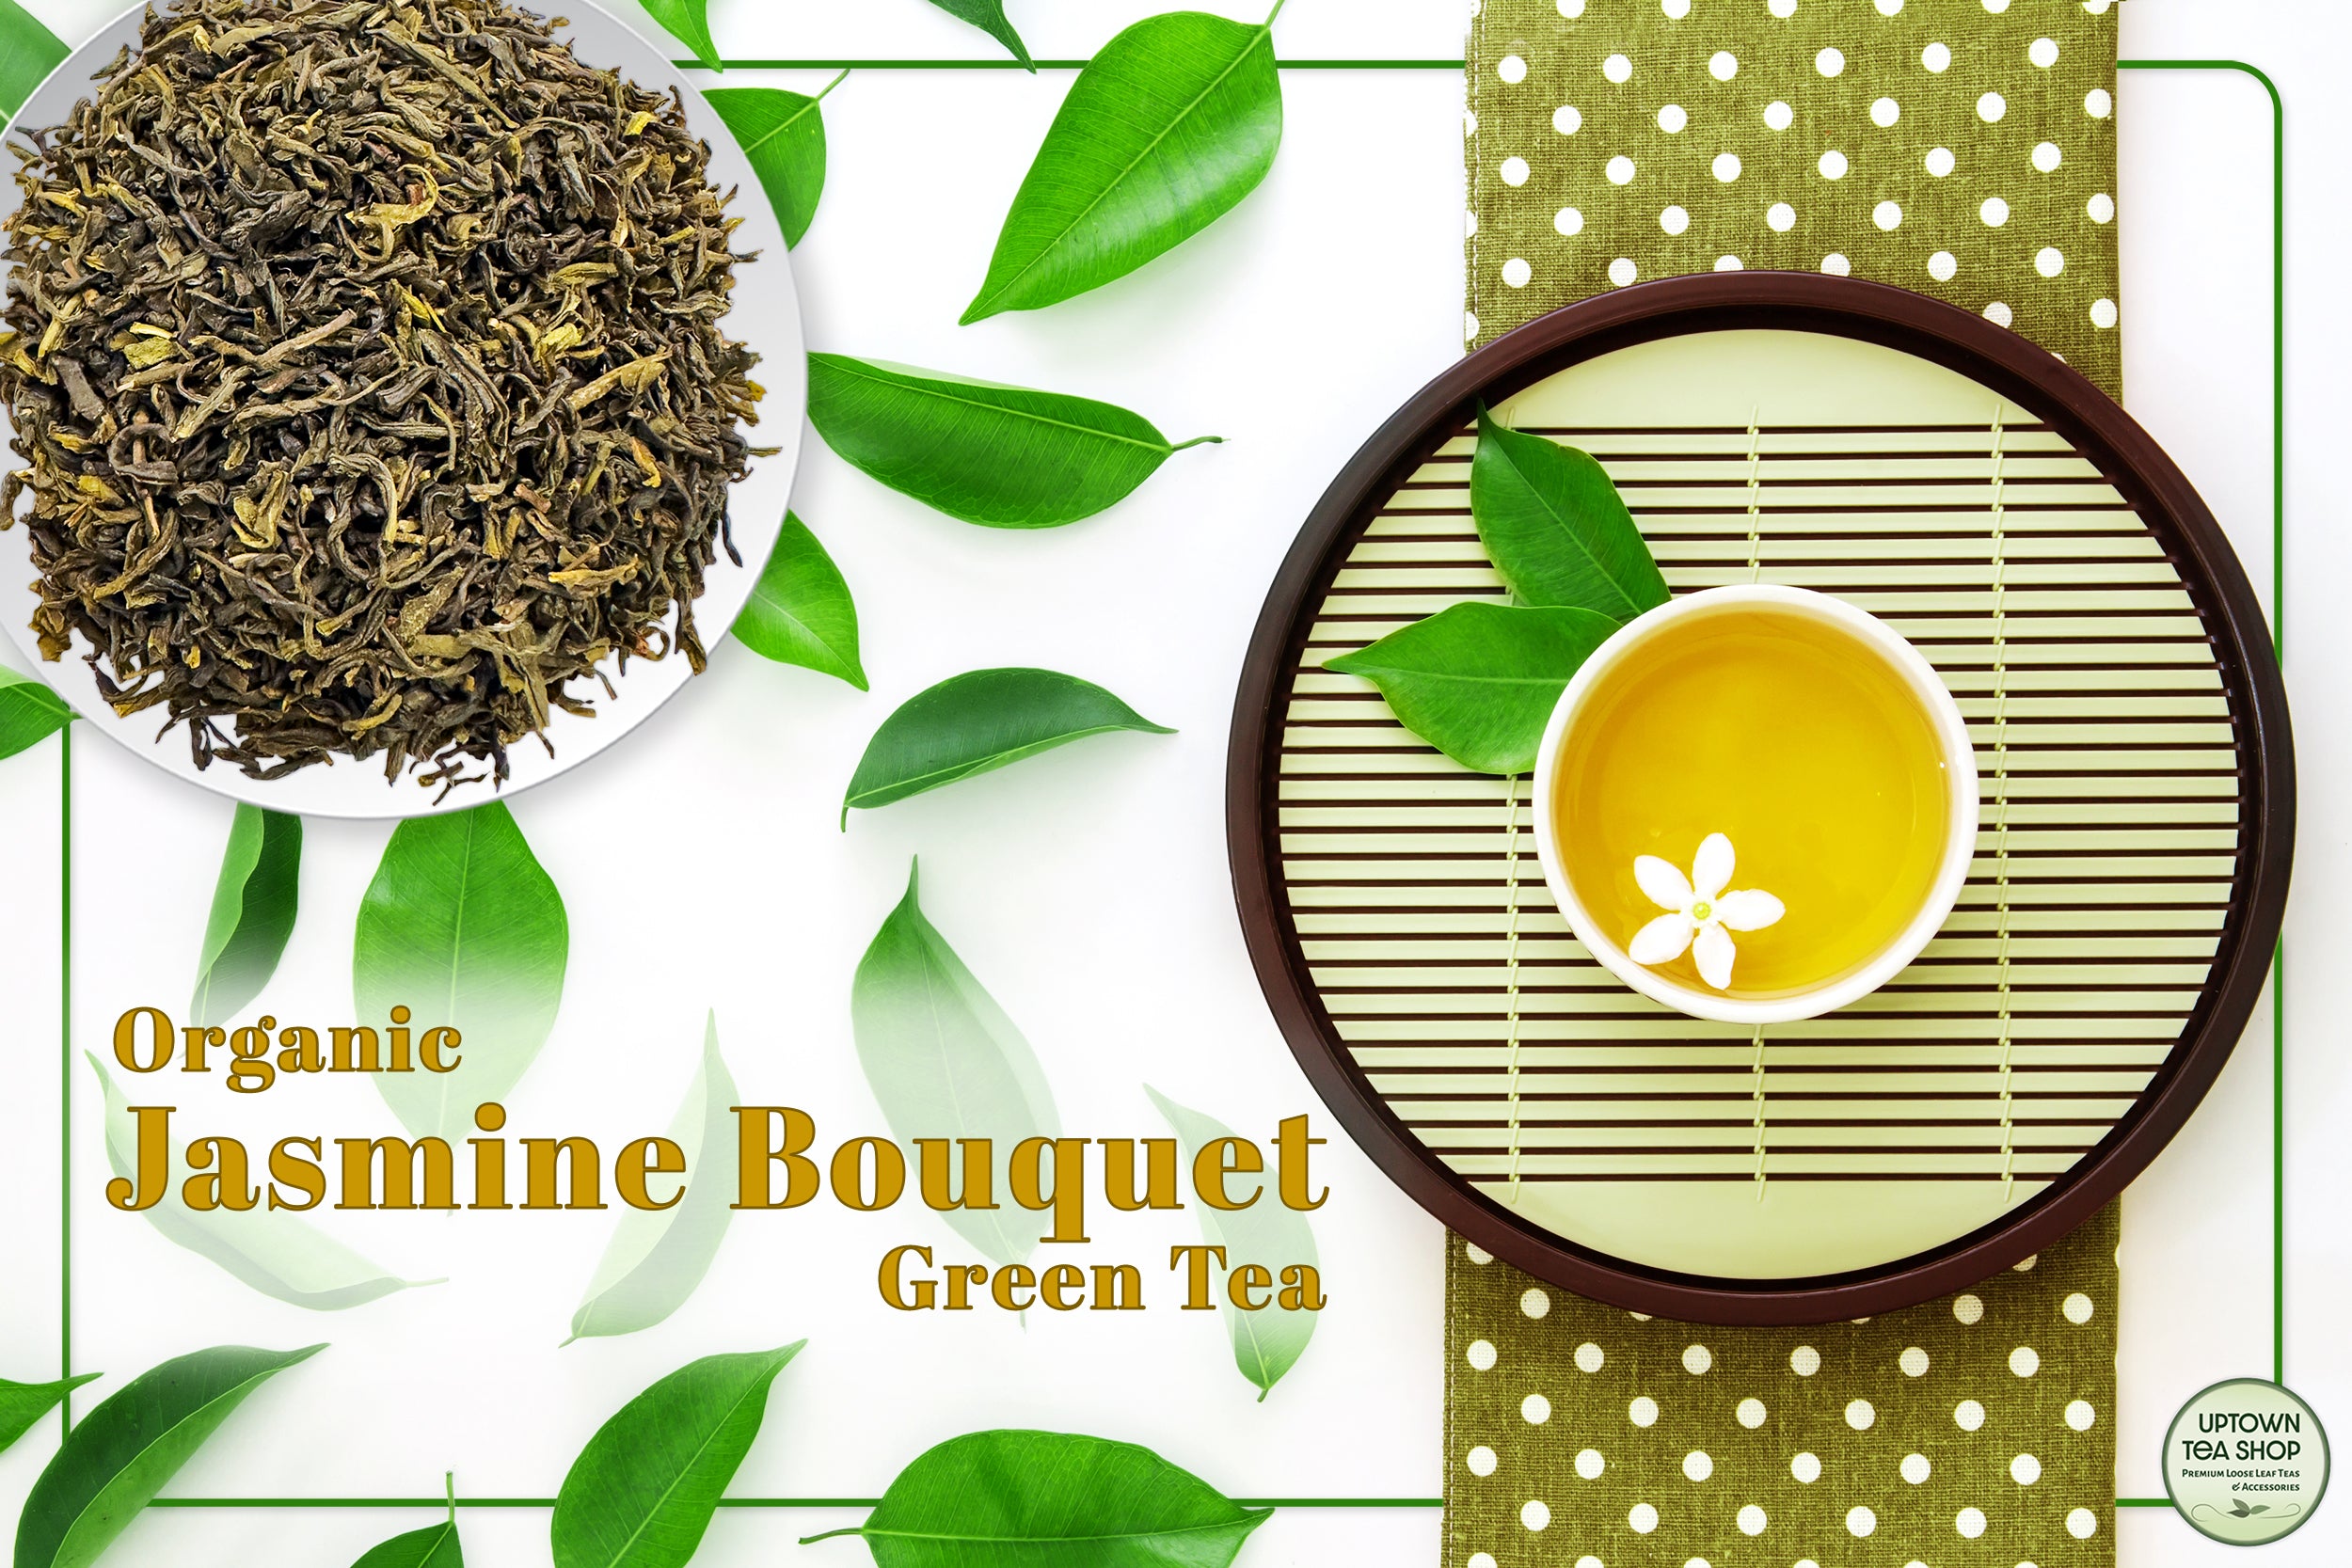 Organic Jasmine Bouquet Green Tea